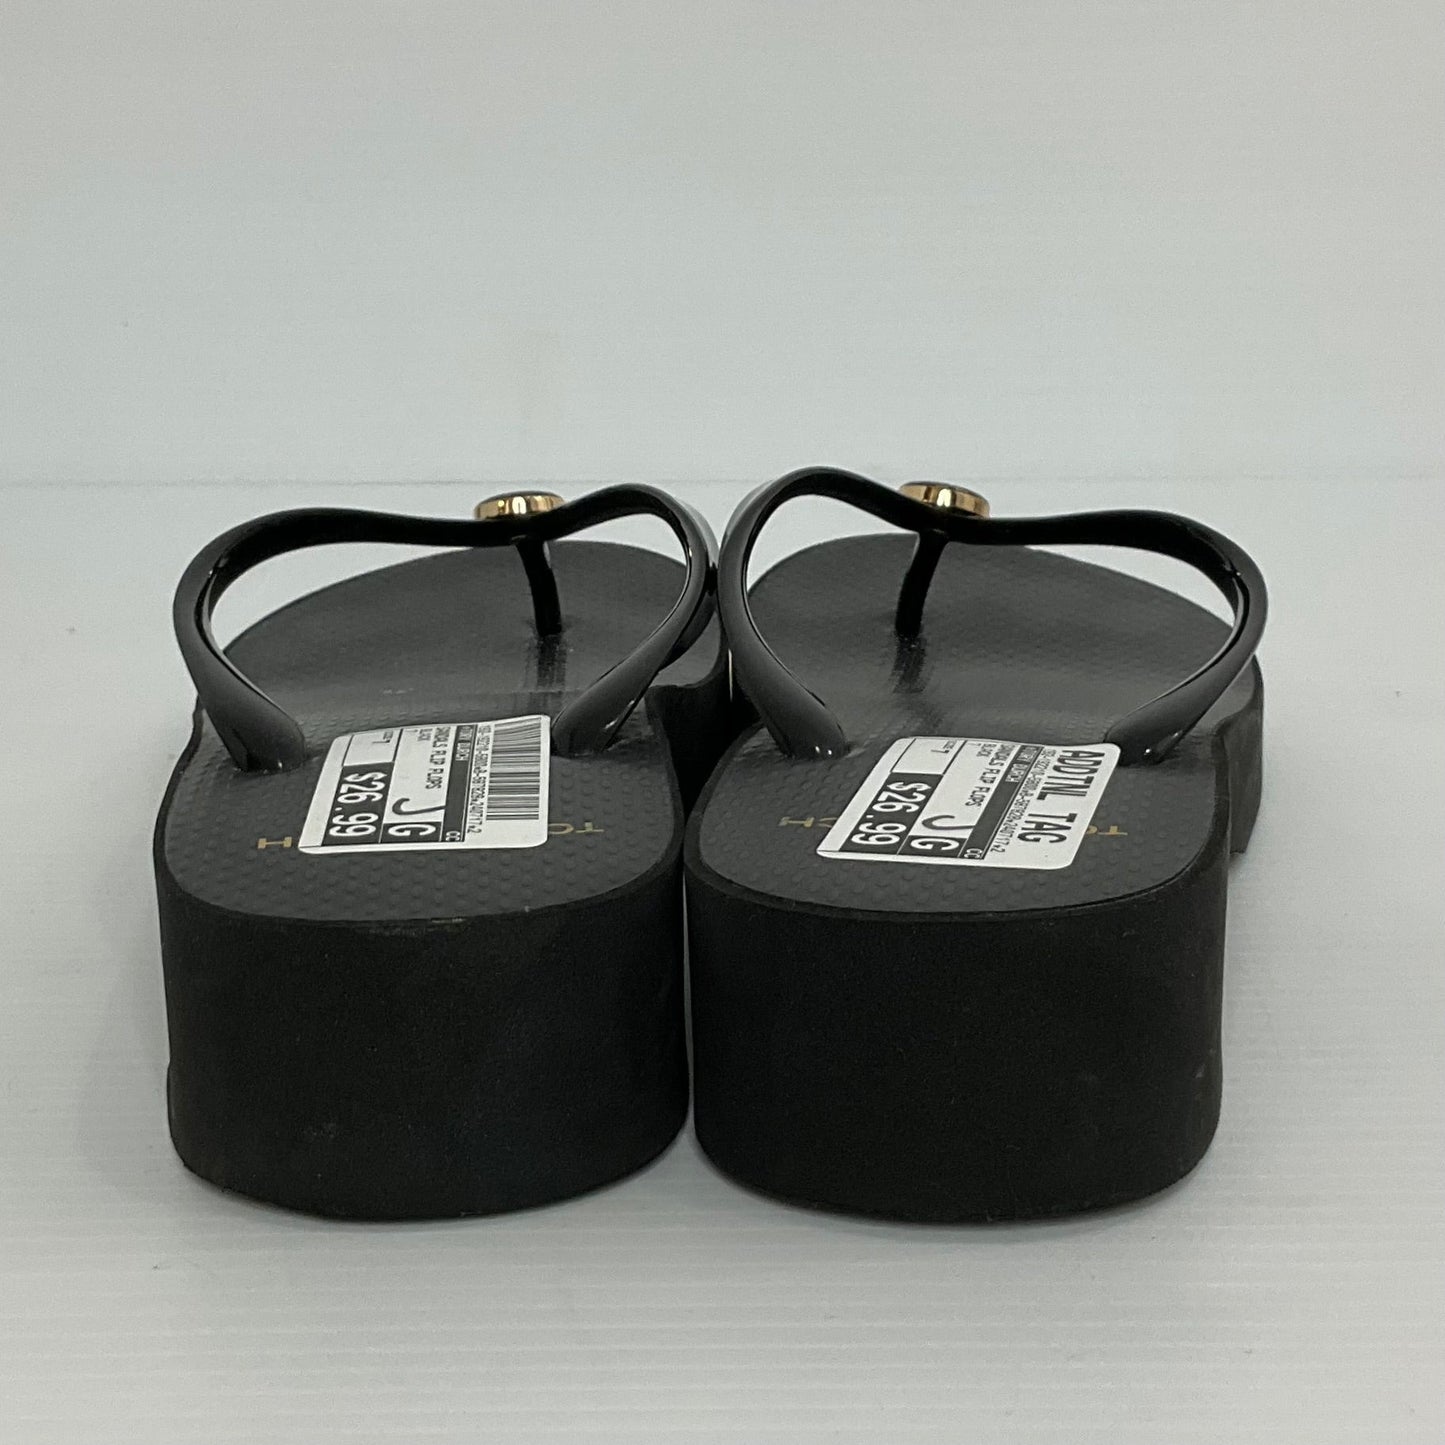 Black Sandals Flip Flops Tory Burch, Size 7